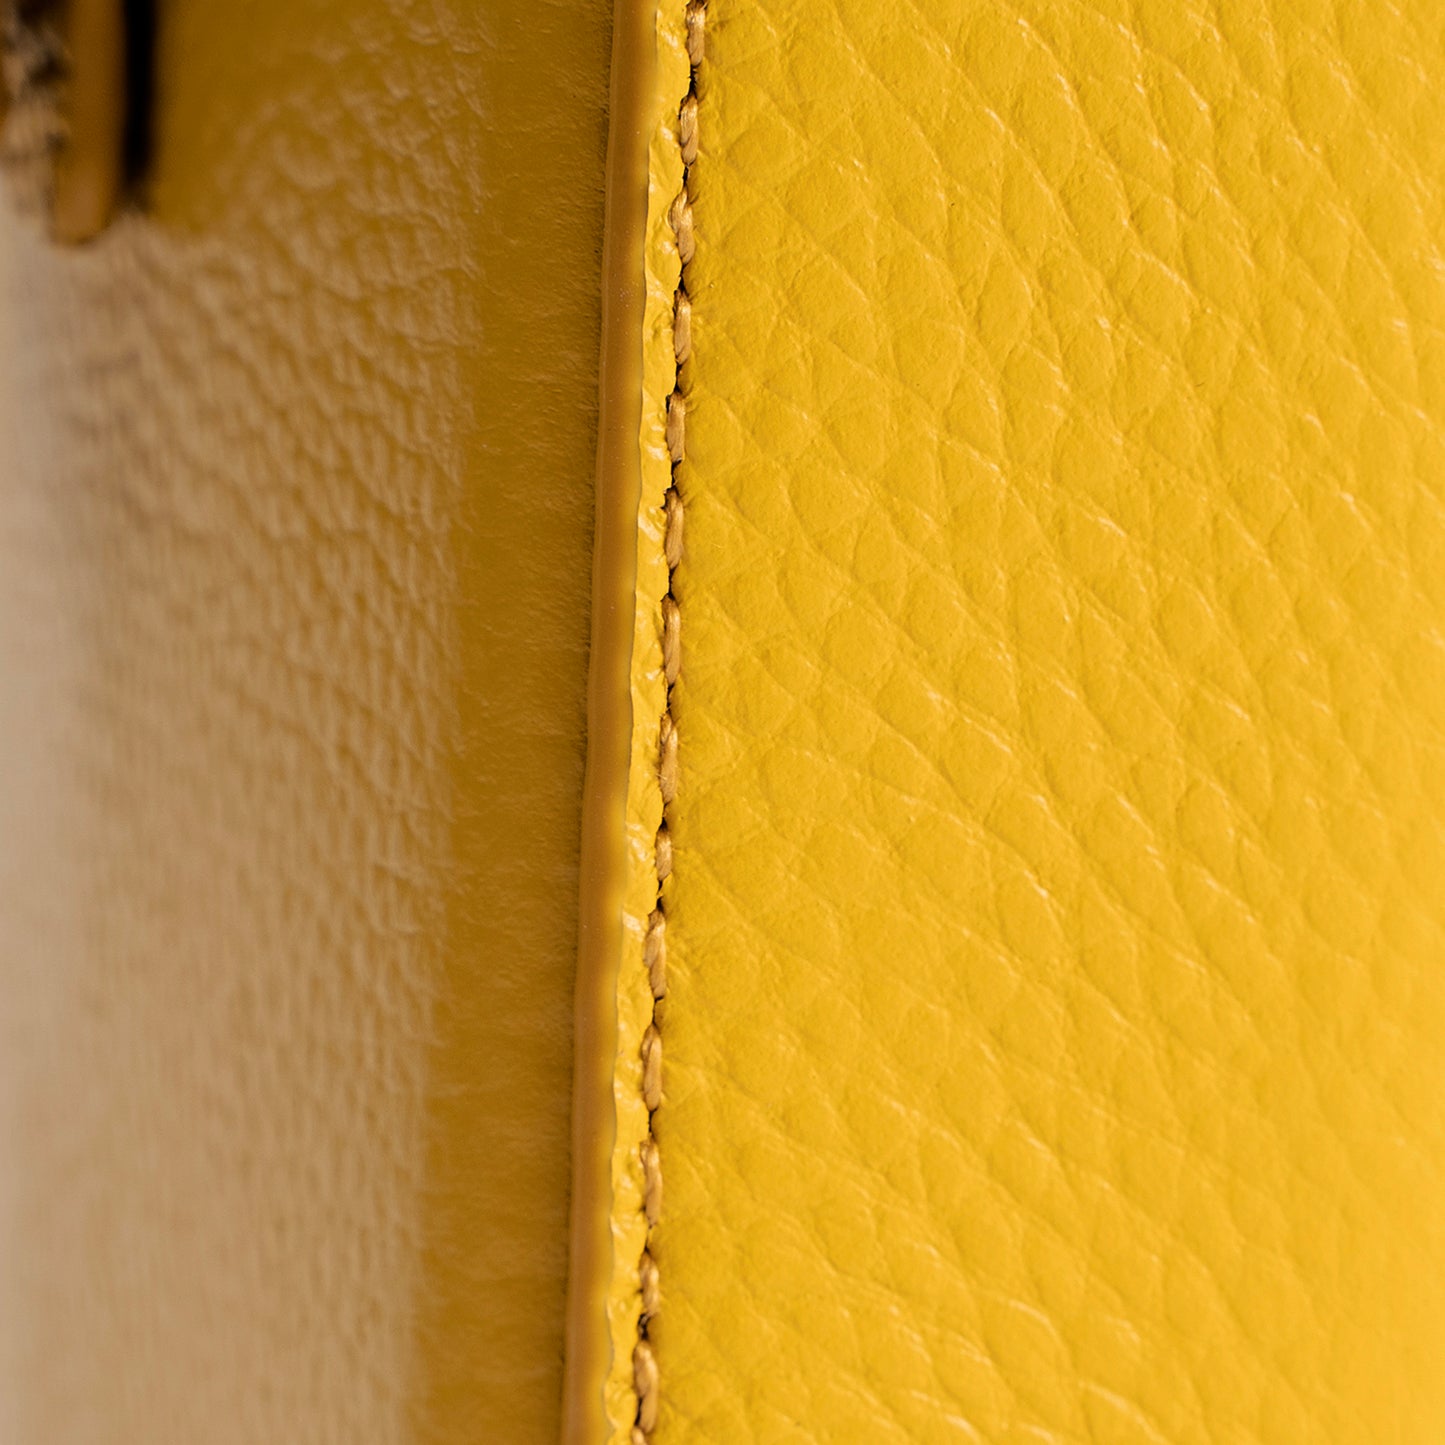 Phone-Bag (Yellow Split Leather)